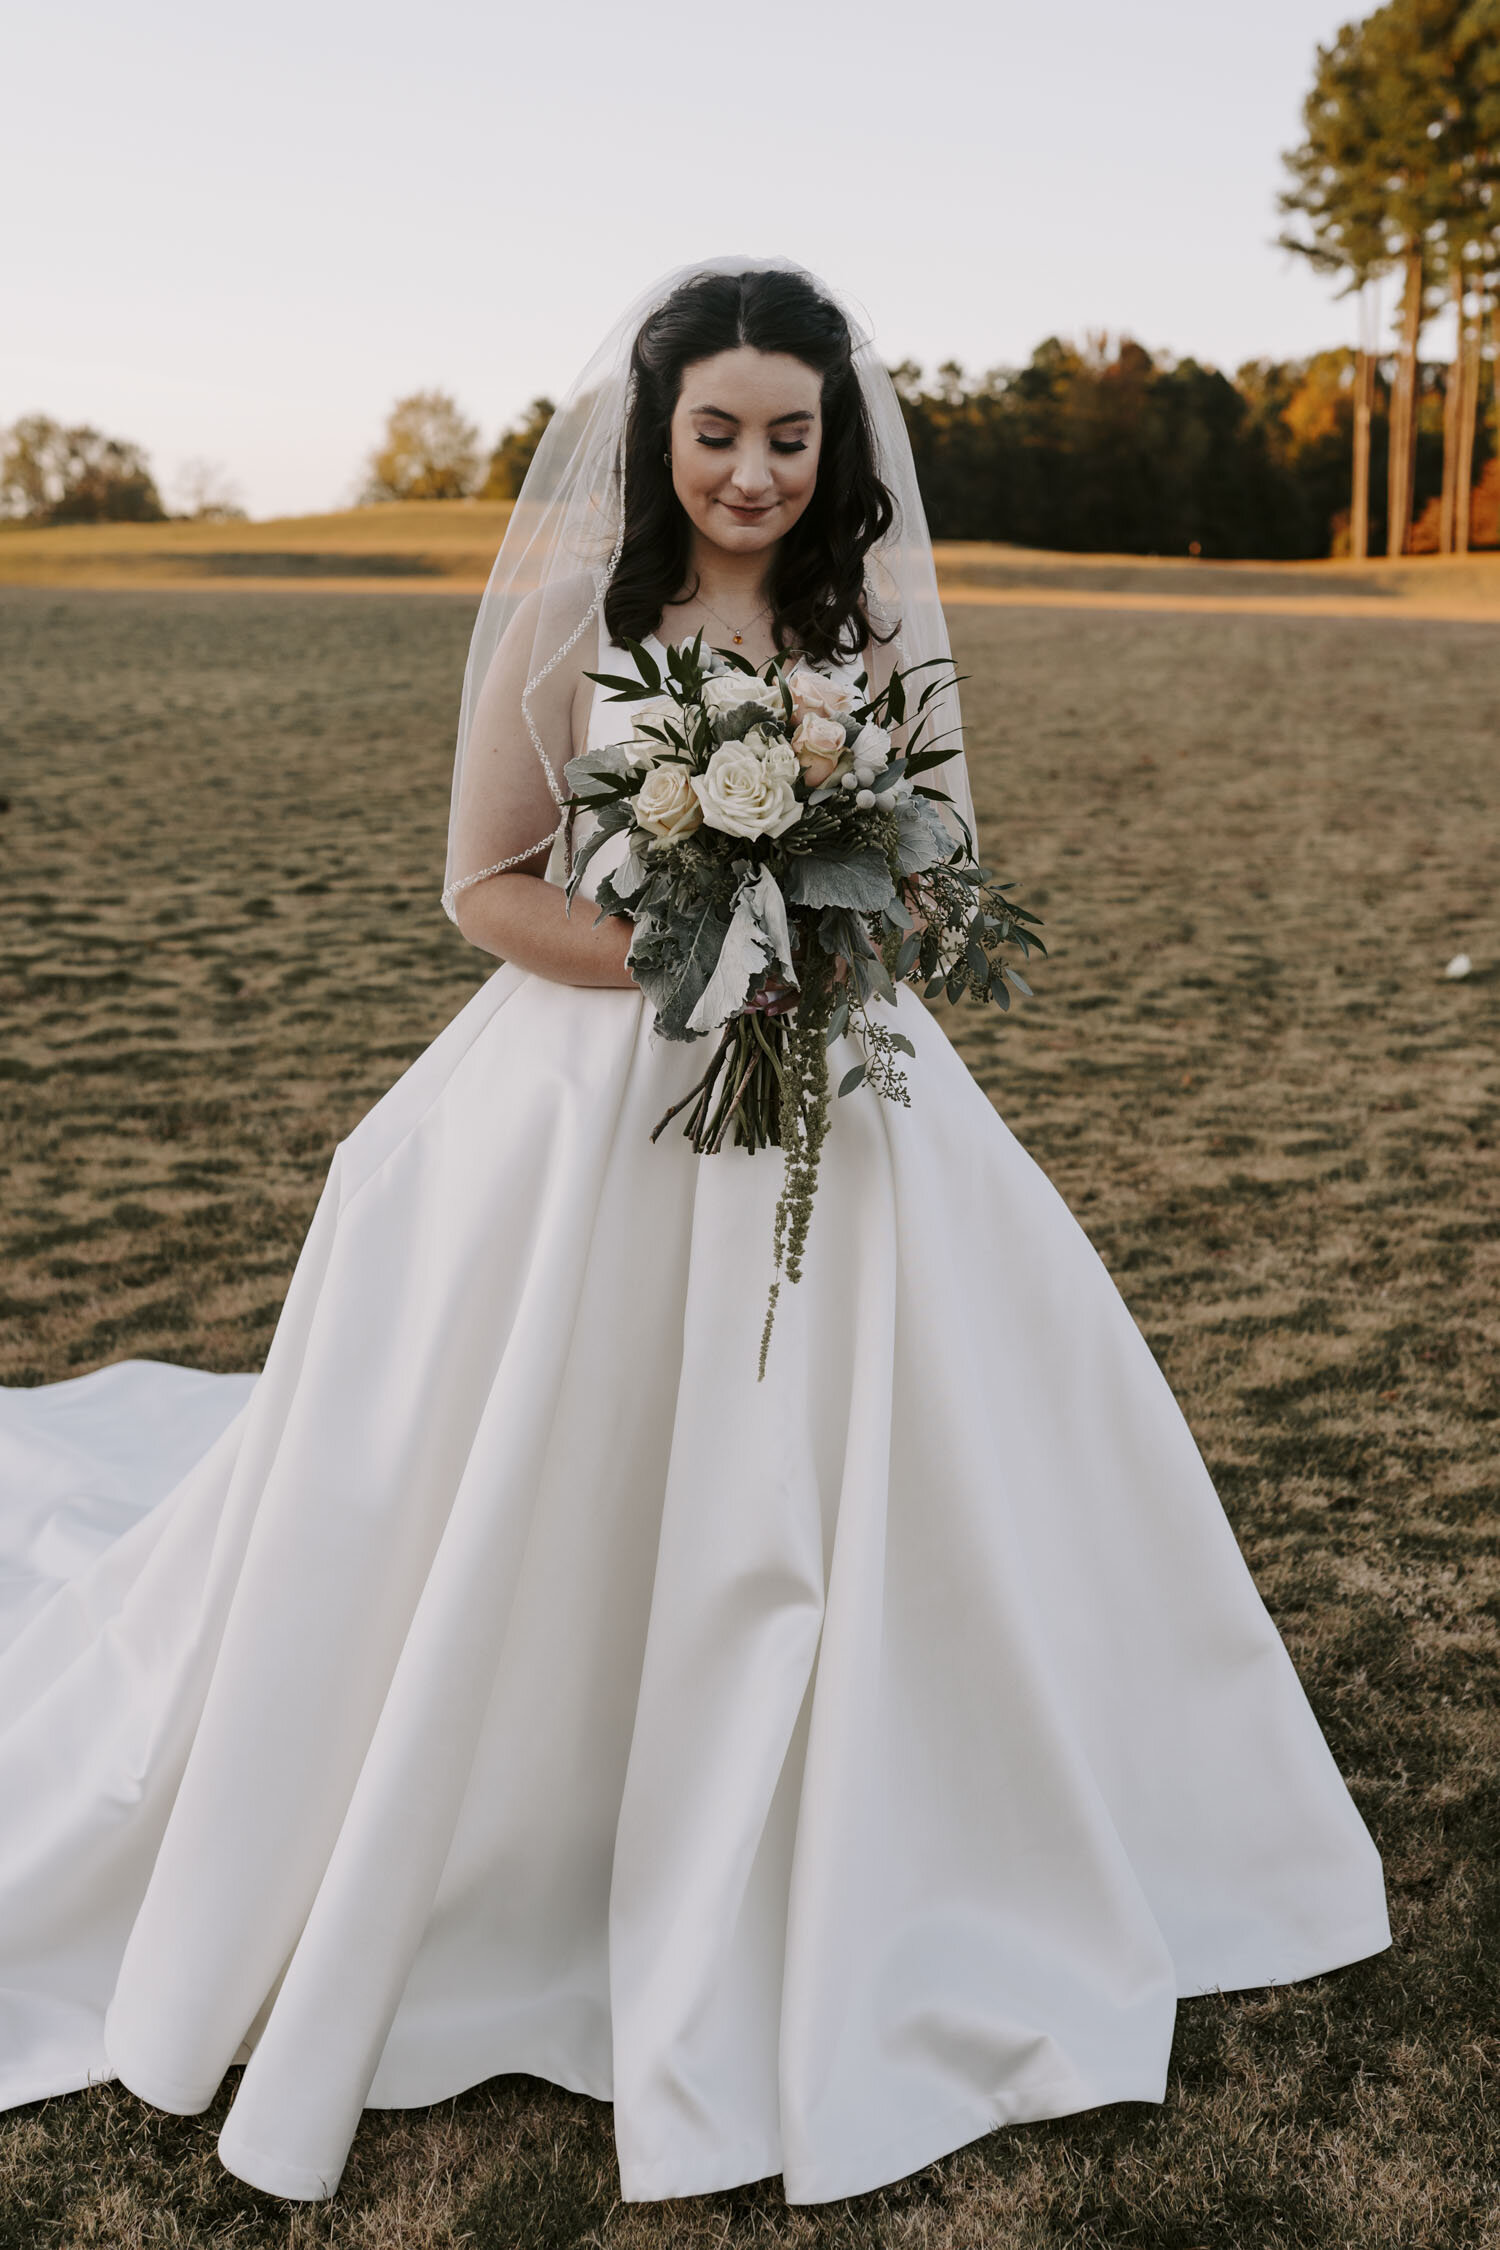 Classy and Elegant Bridal Portraits at Grandover Resort Wedding by Kayli LaFon Photography | Greensboro Winston-Salem, NC Wedding Photographer